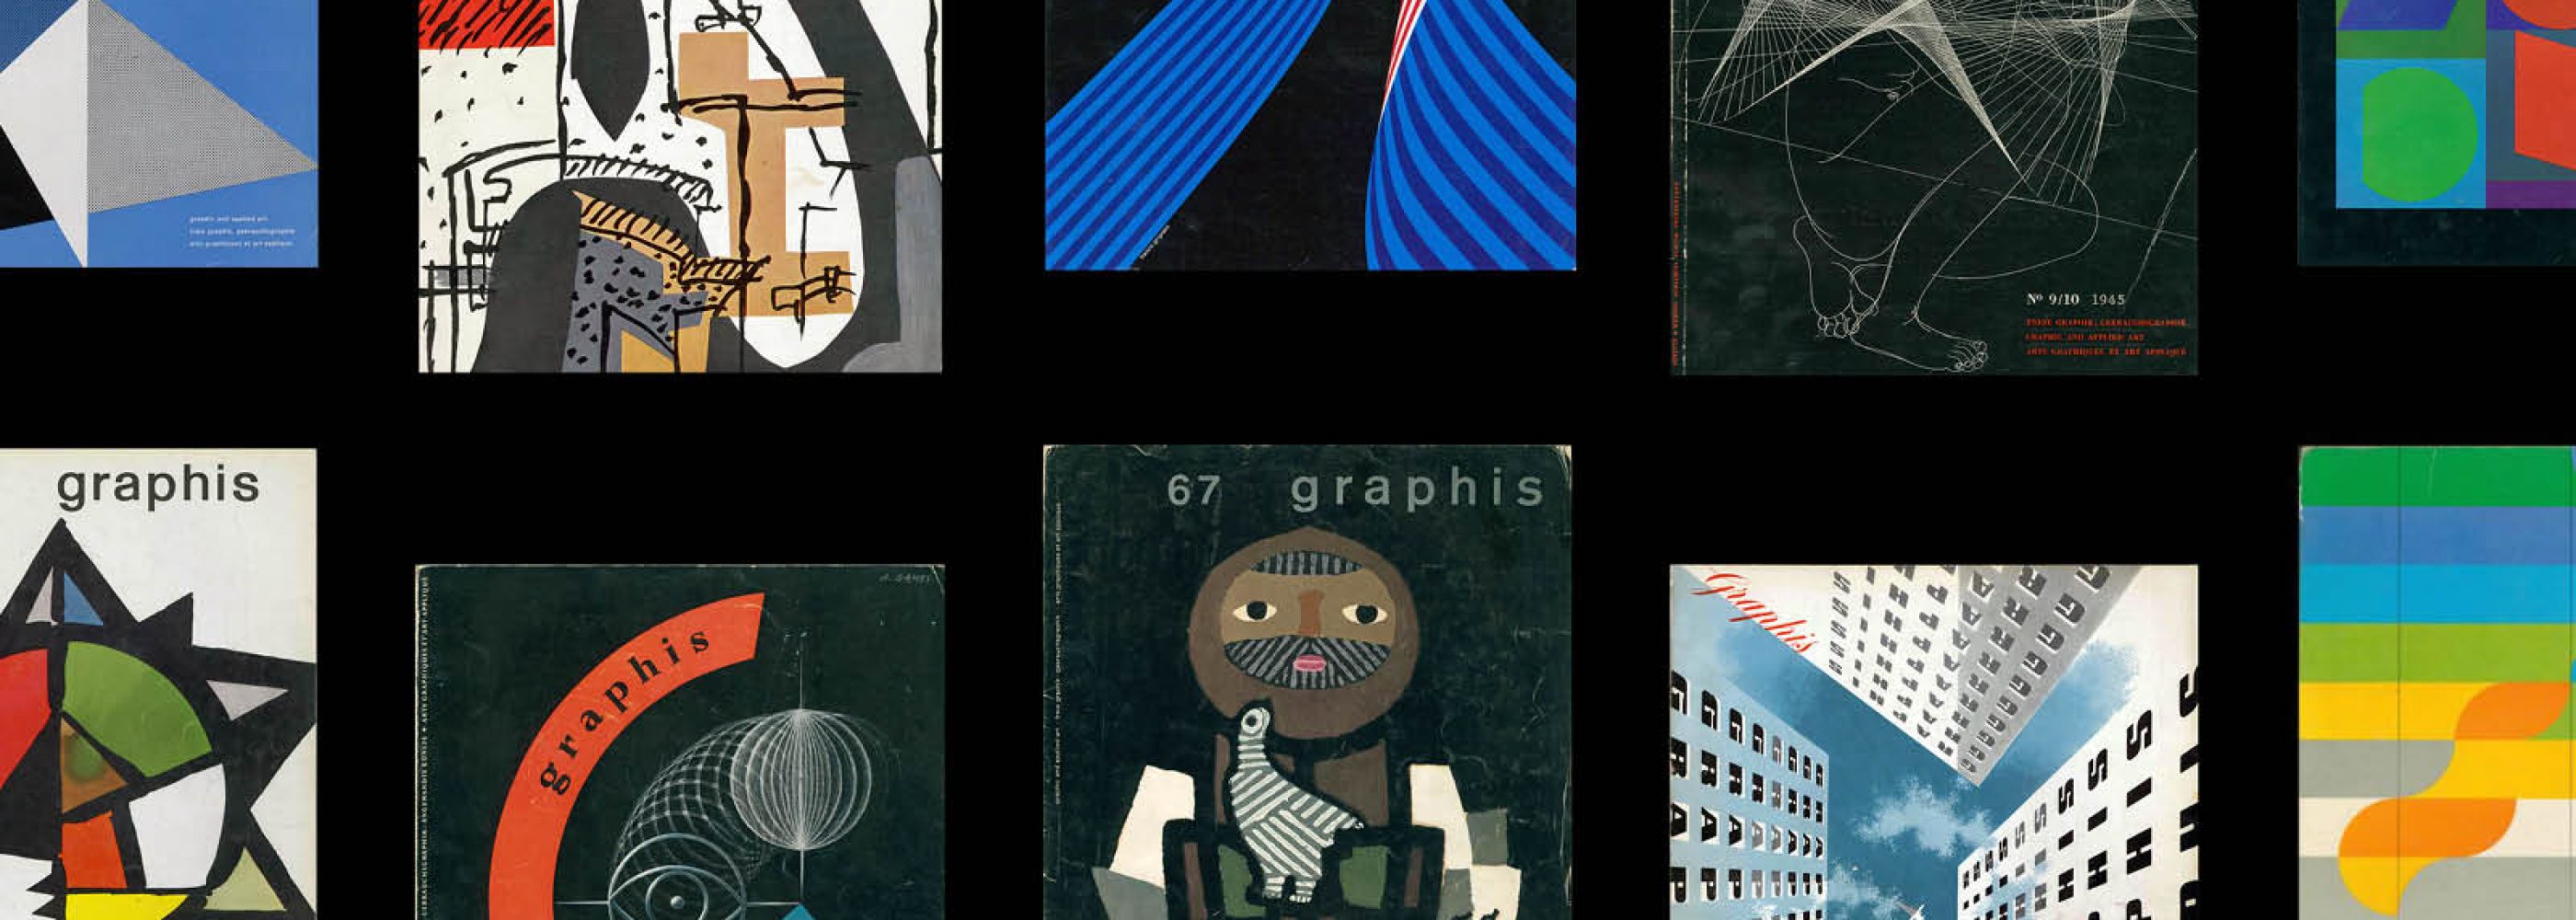 Graphis Magazine - Graphic Design History